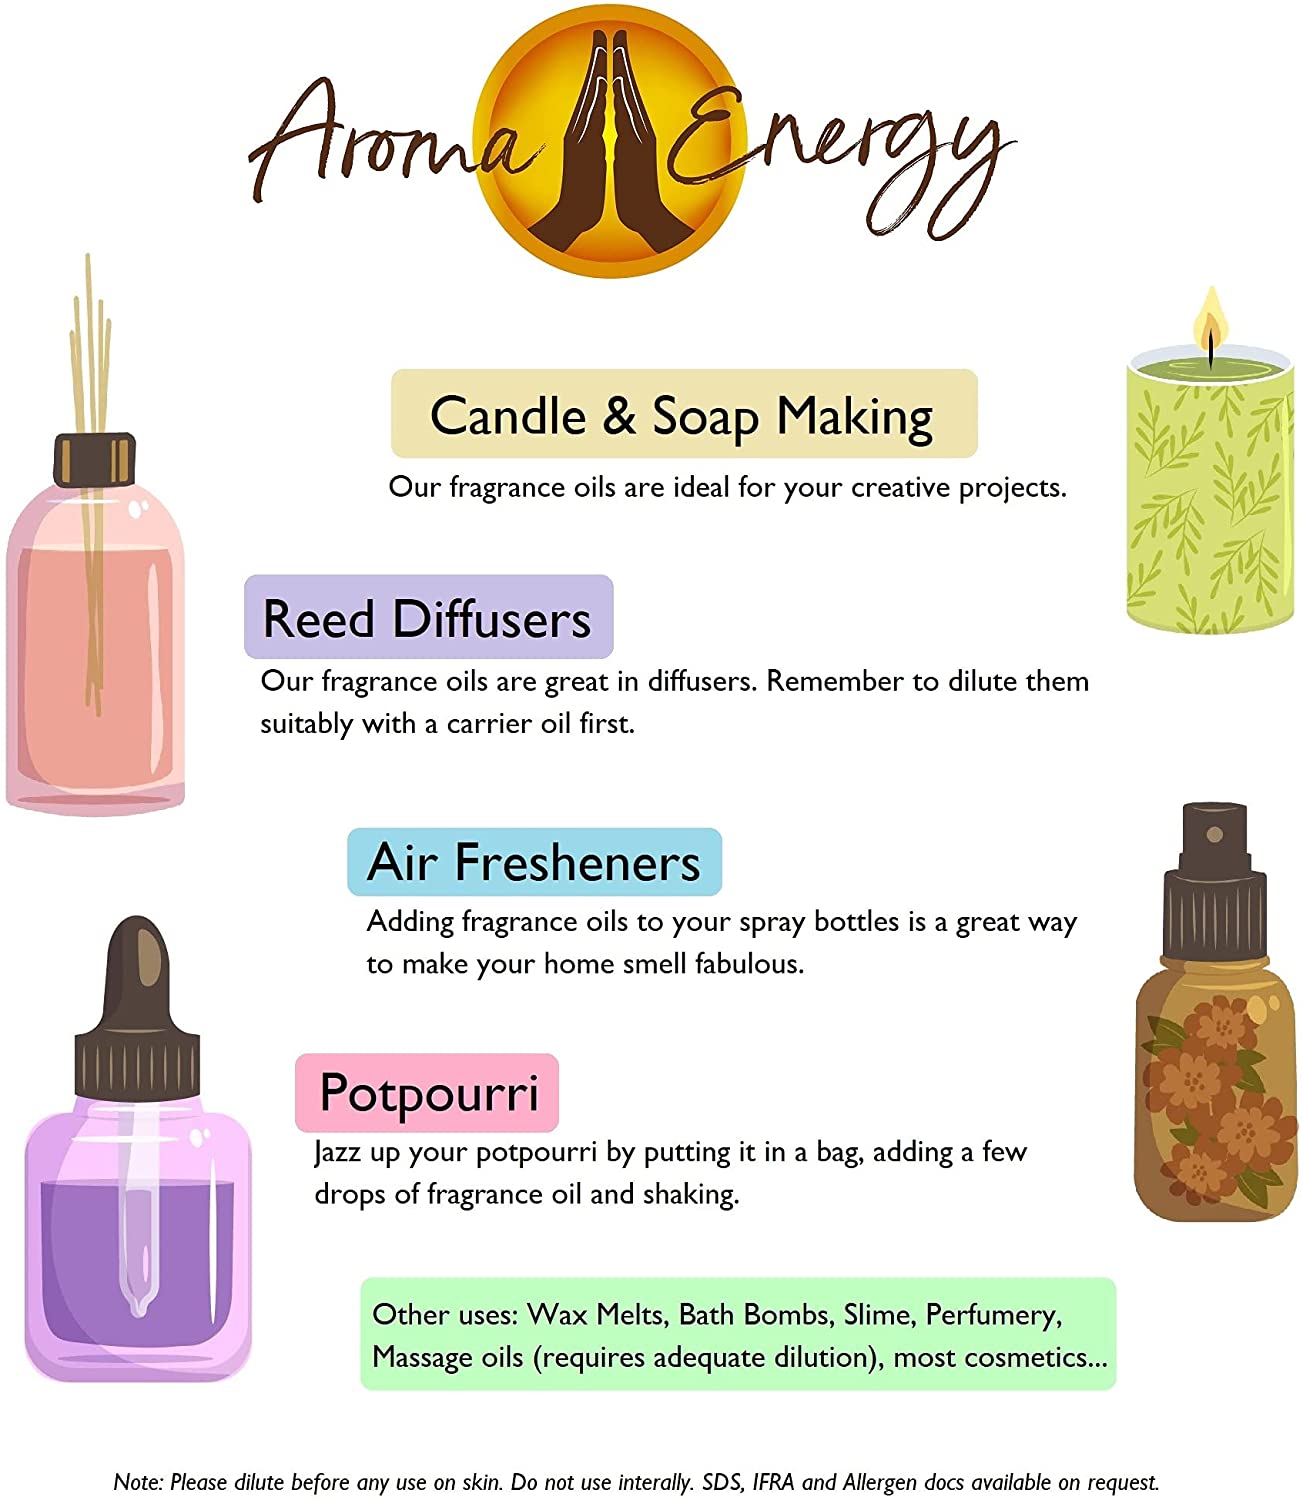 Candy Cane Fragrance Oil - Aroma Energy